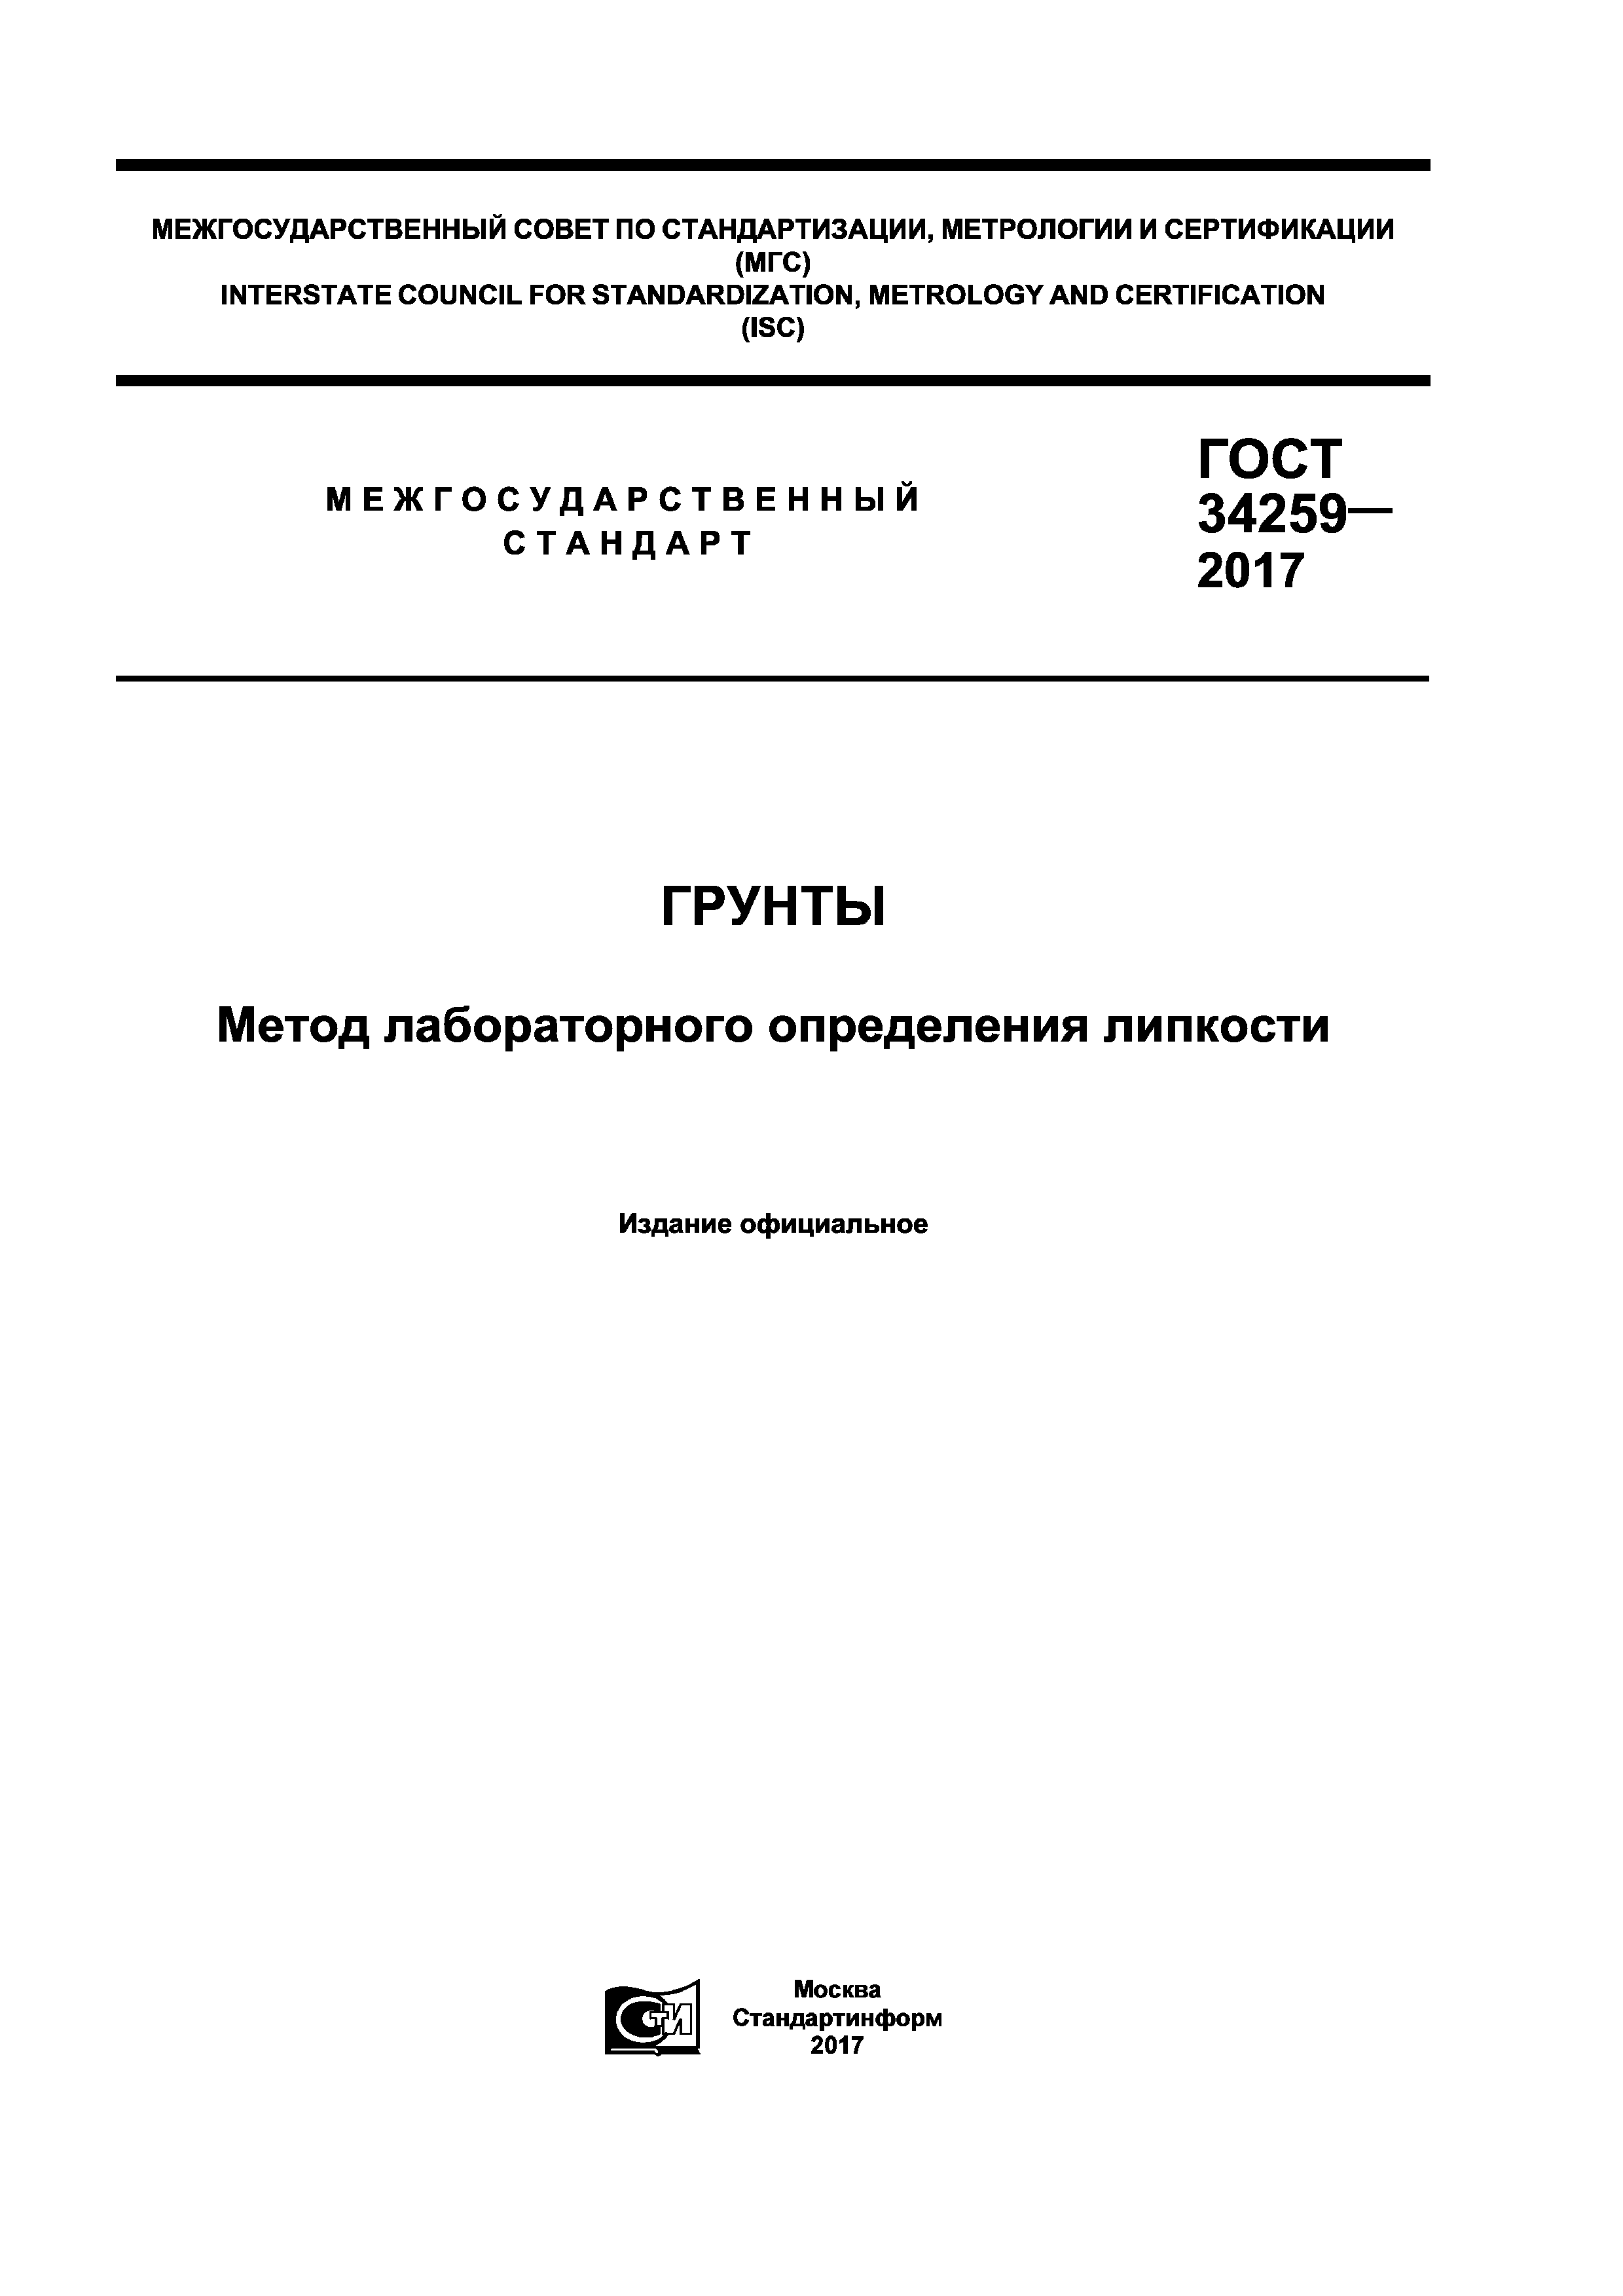 ГОСТ 34259-2017